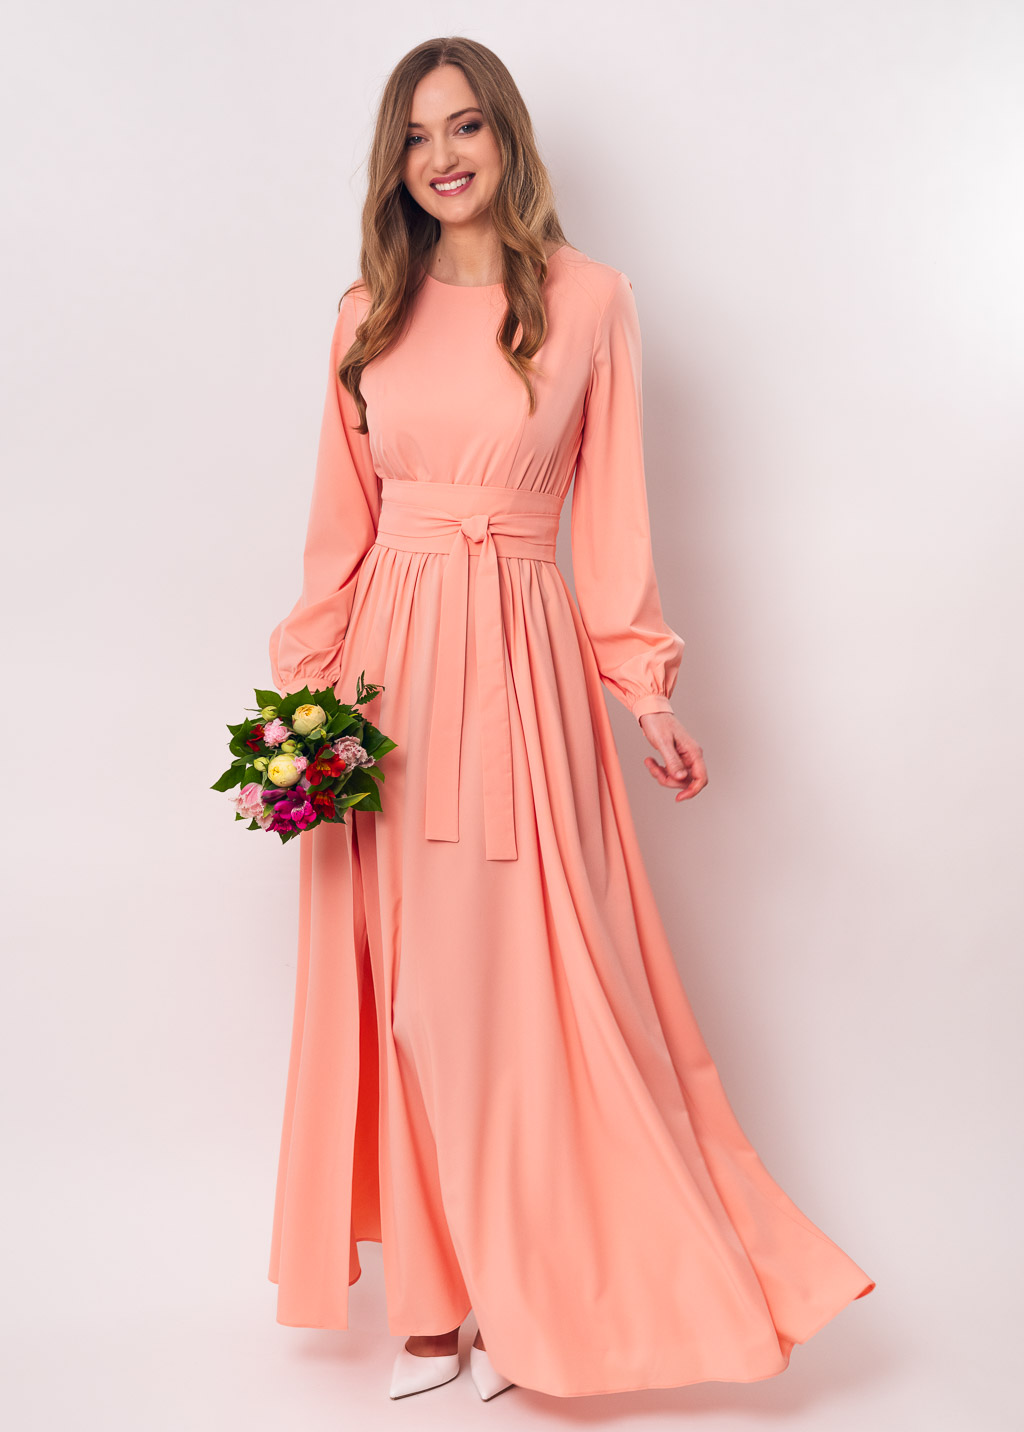 Blush pink long dress with belt